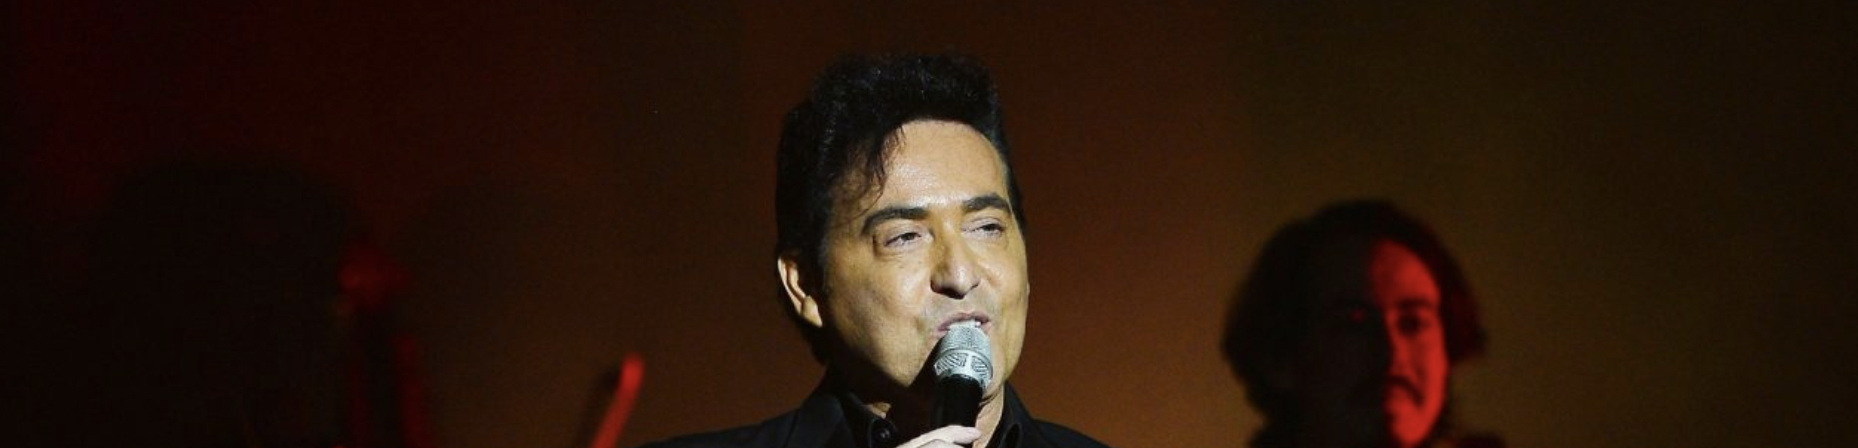 II Divo singer Carlos Marin had died aged 53